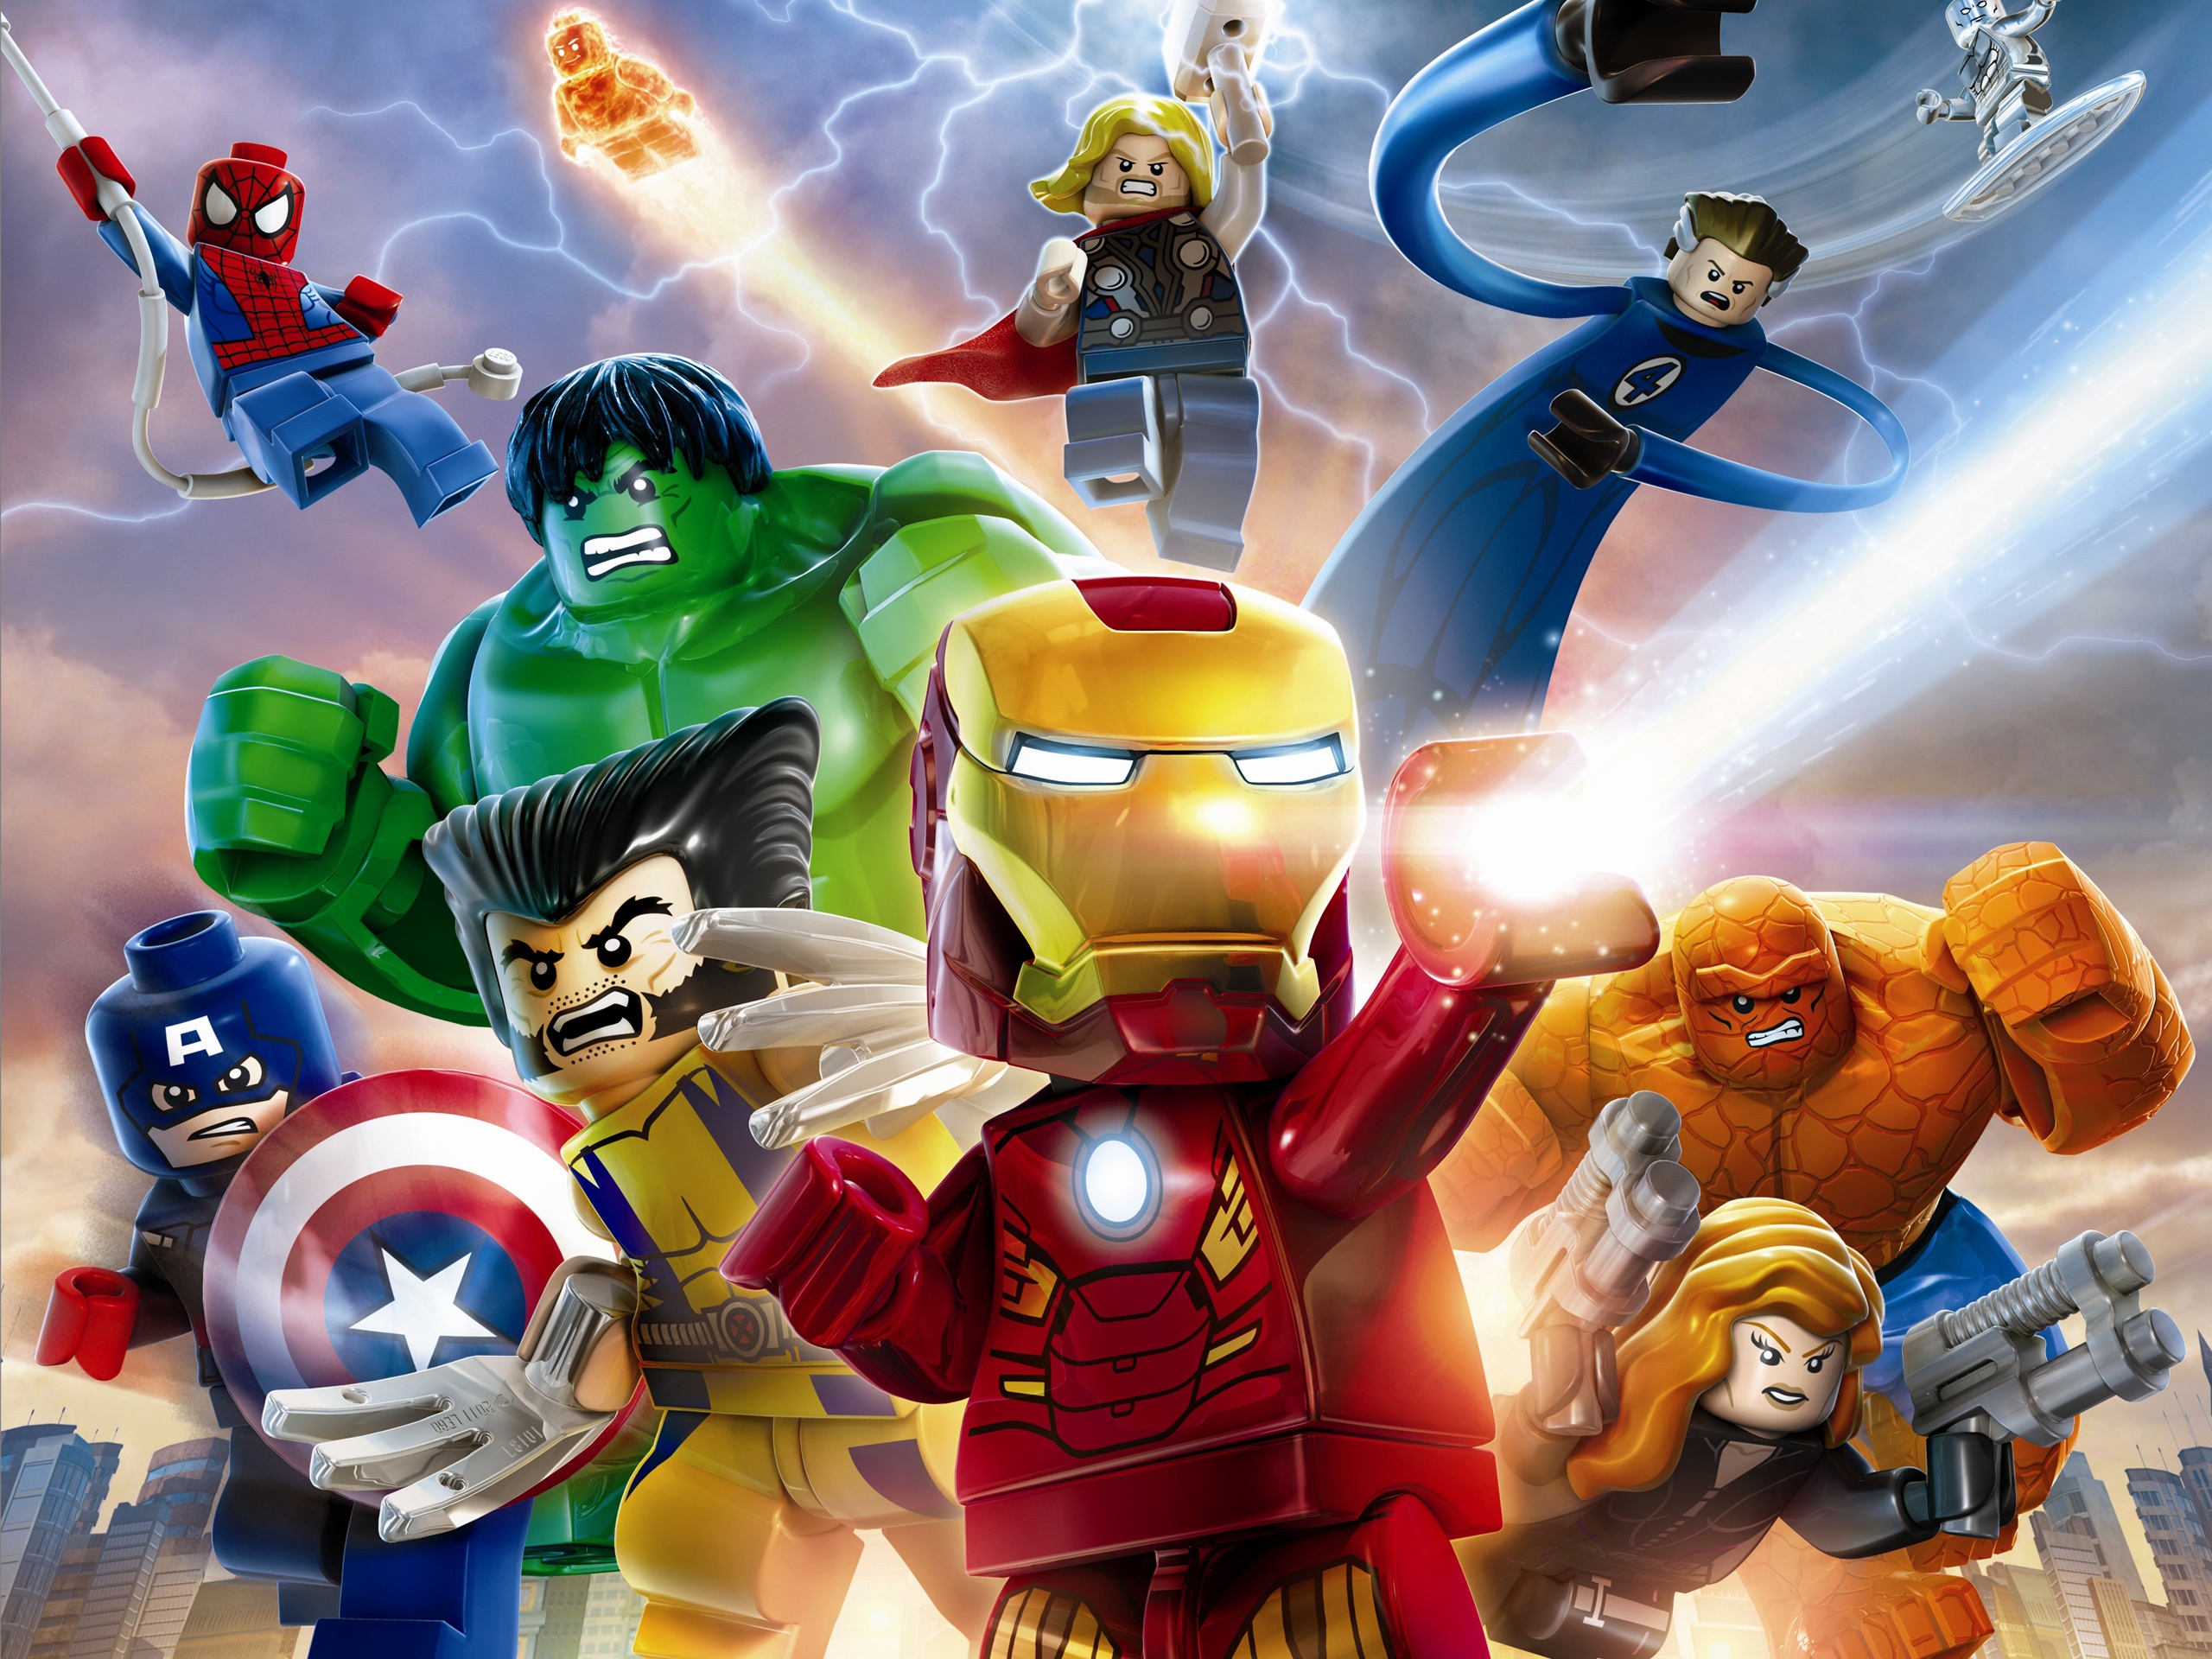 Lego Marvel Super Heroes Wallpaper Desktop